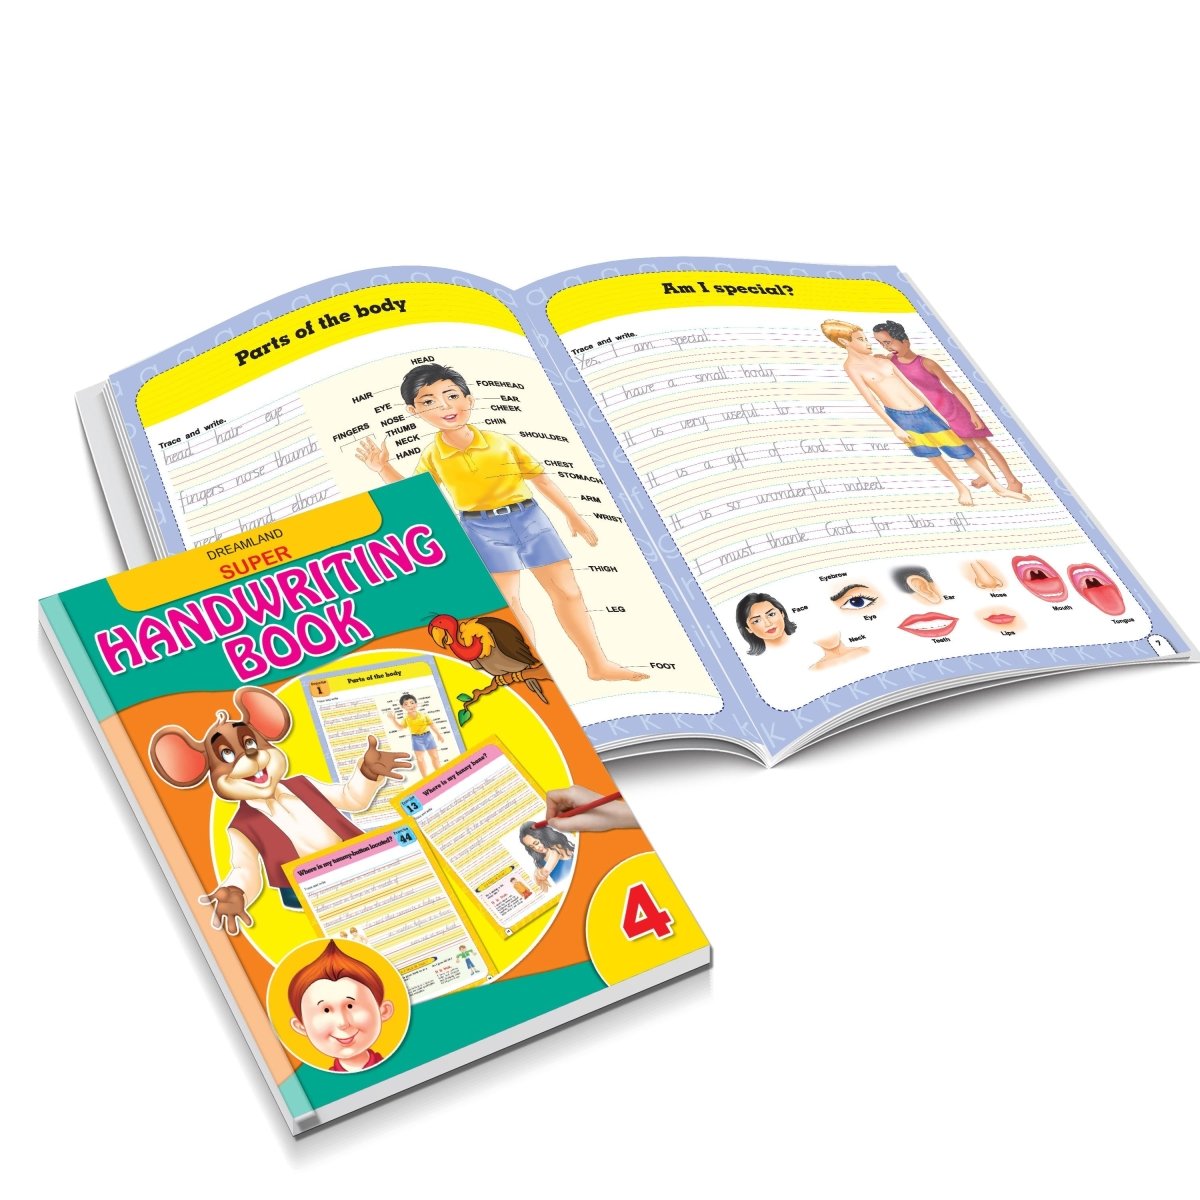 Dreamland Publications Super Handwriting Books Pack- (7 Titles) - 9789388371667